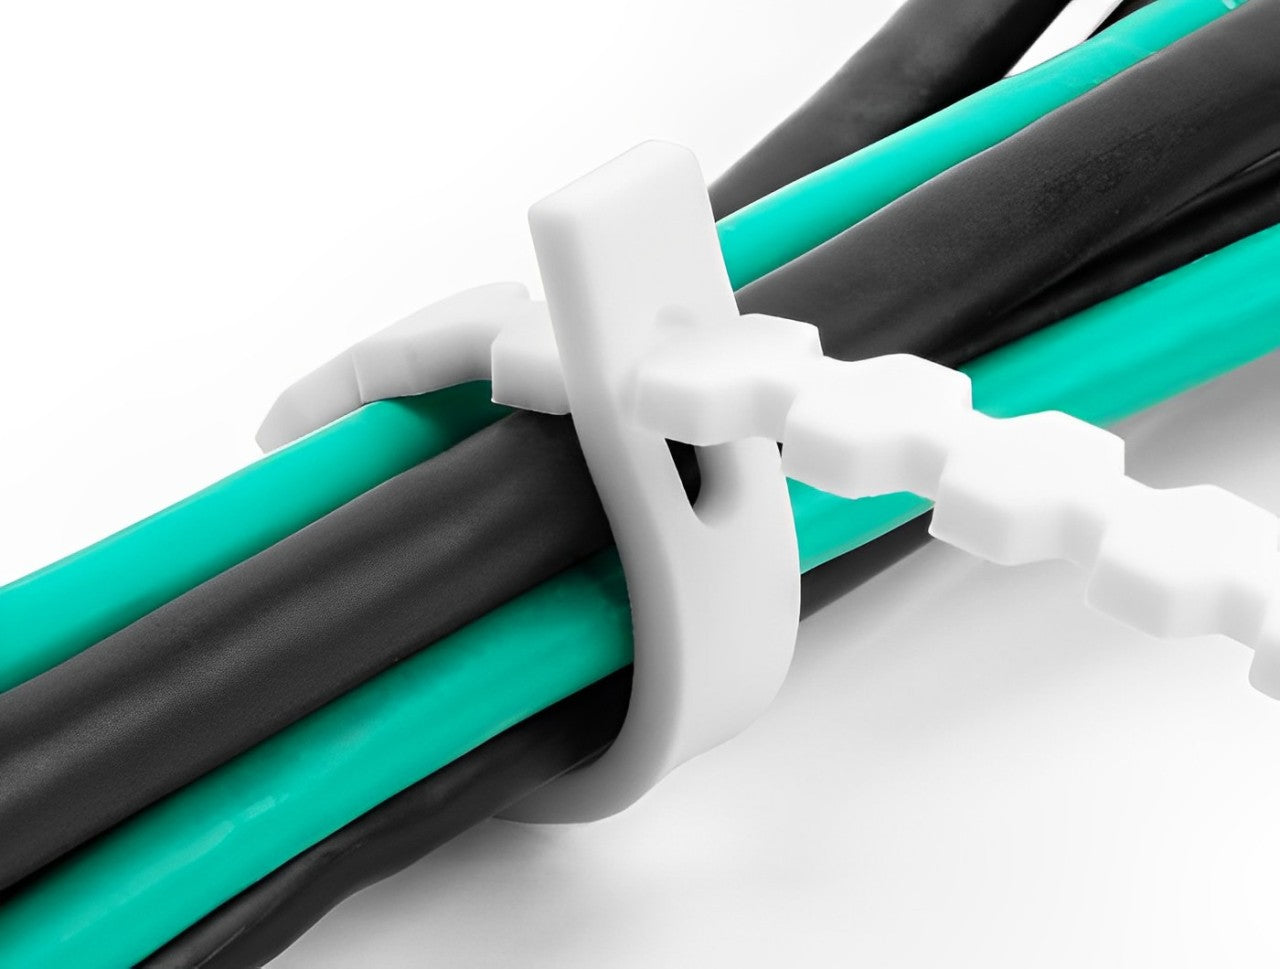 Delock Cable Ties flexible reusable black / white - delock.israel